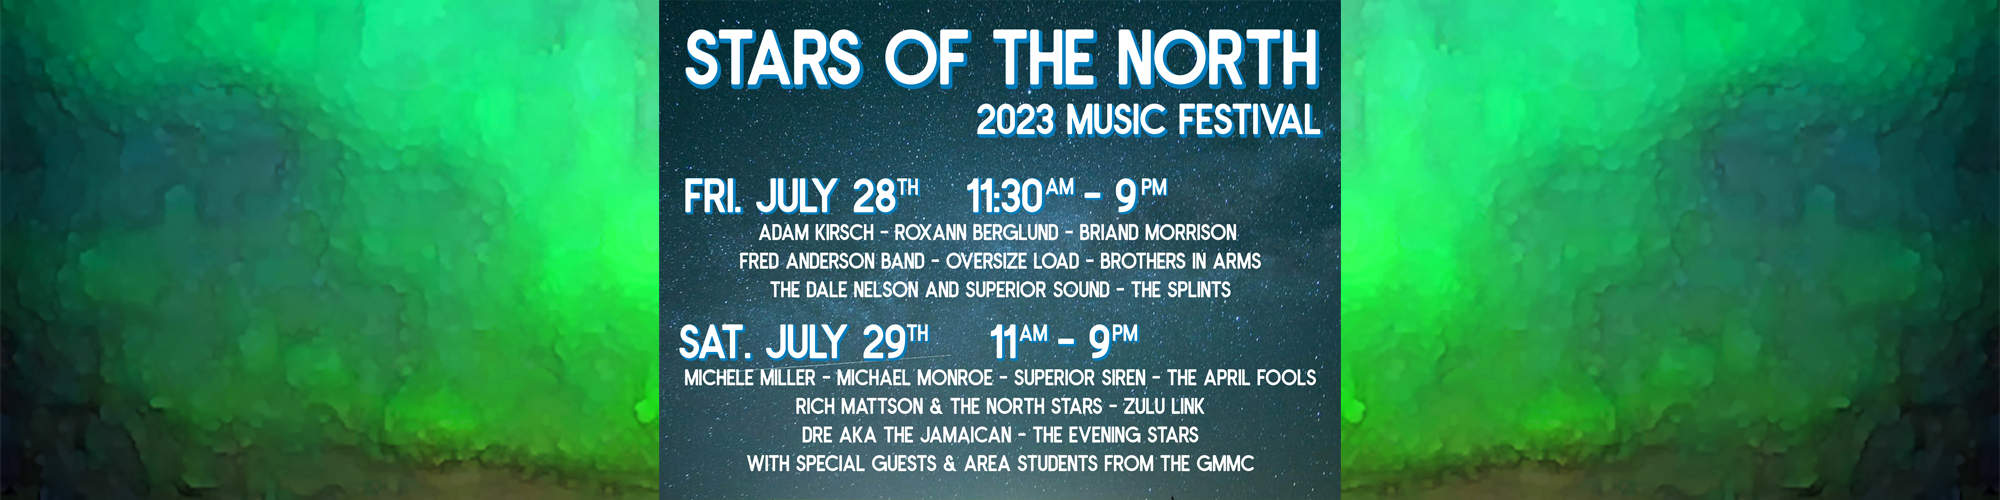 Stars of the North festival header